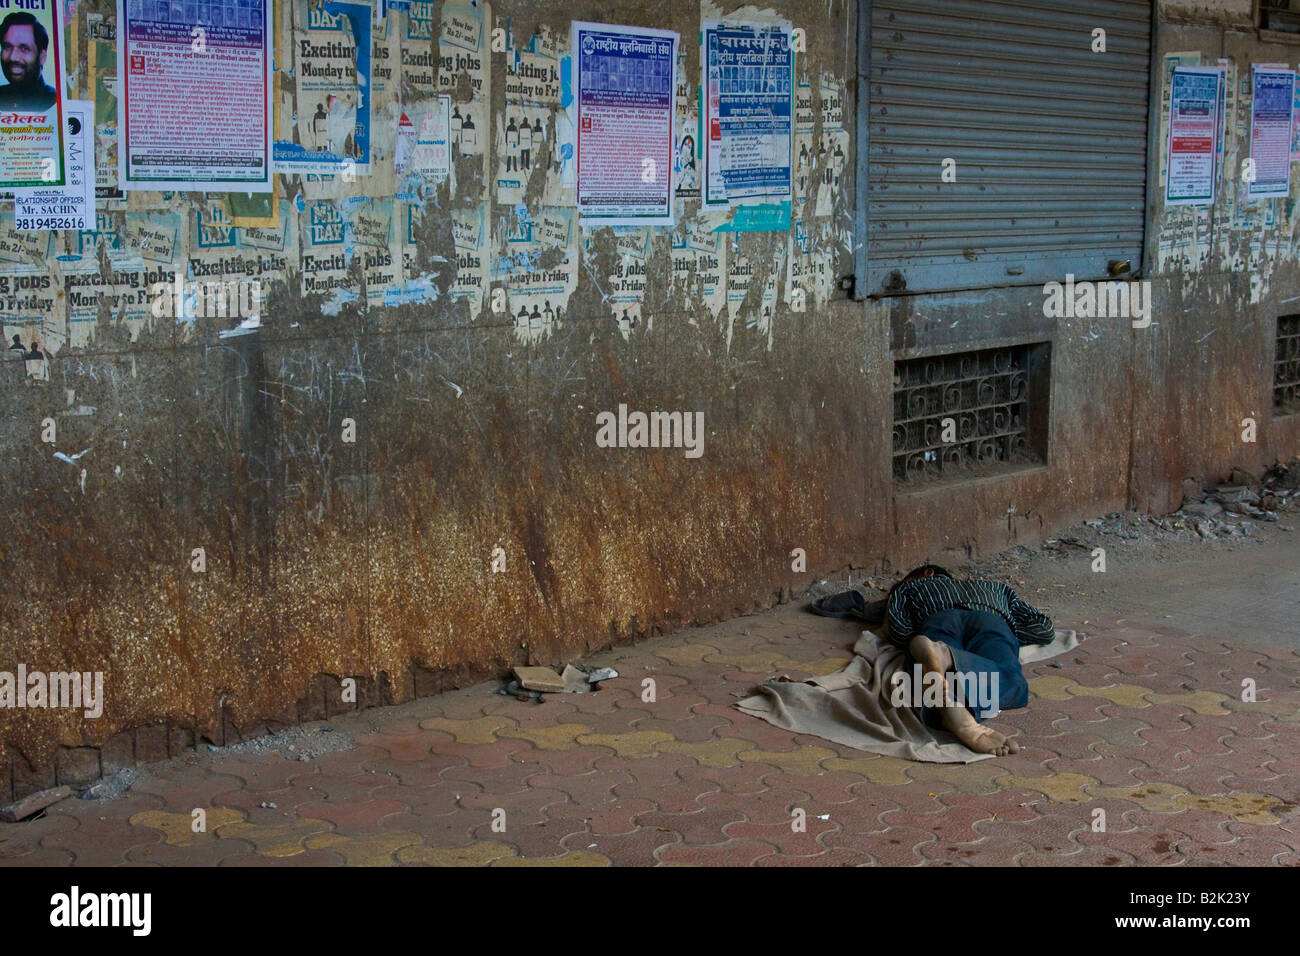 Homeless Boy Sleeping on the Street in Mumbai India Stock Photo